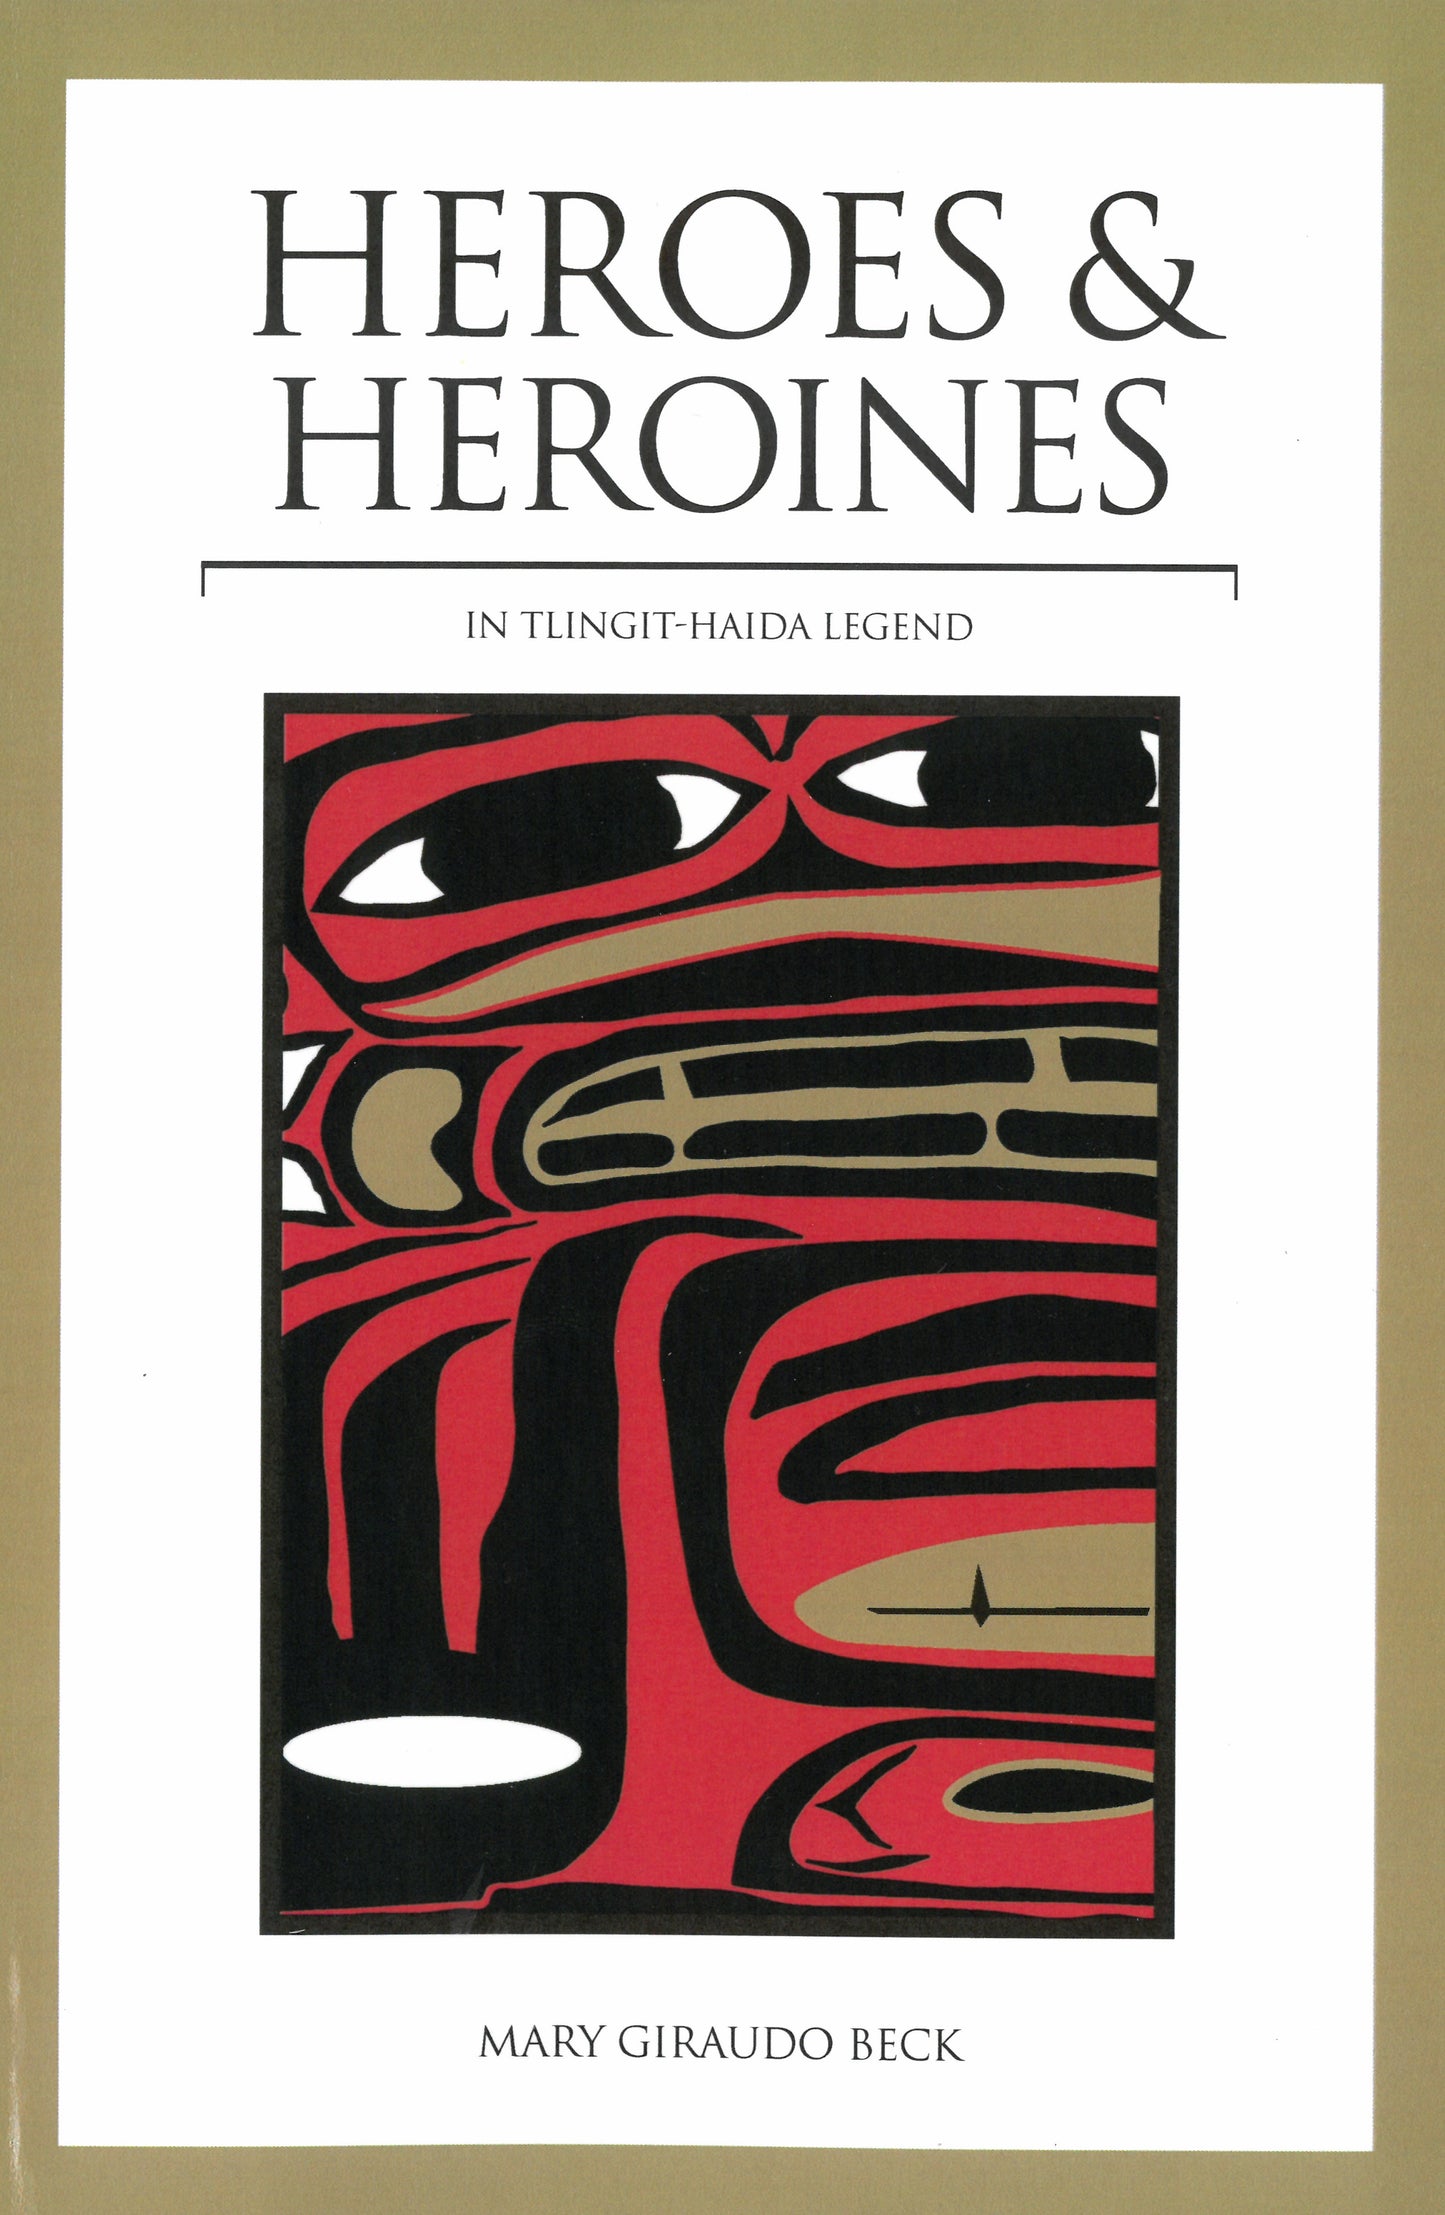 Heroes & Heroines of Tlingit-Haida Legend by Mary Giraudo Beck